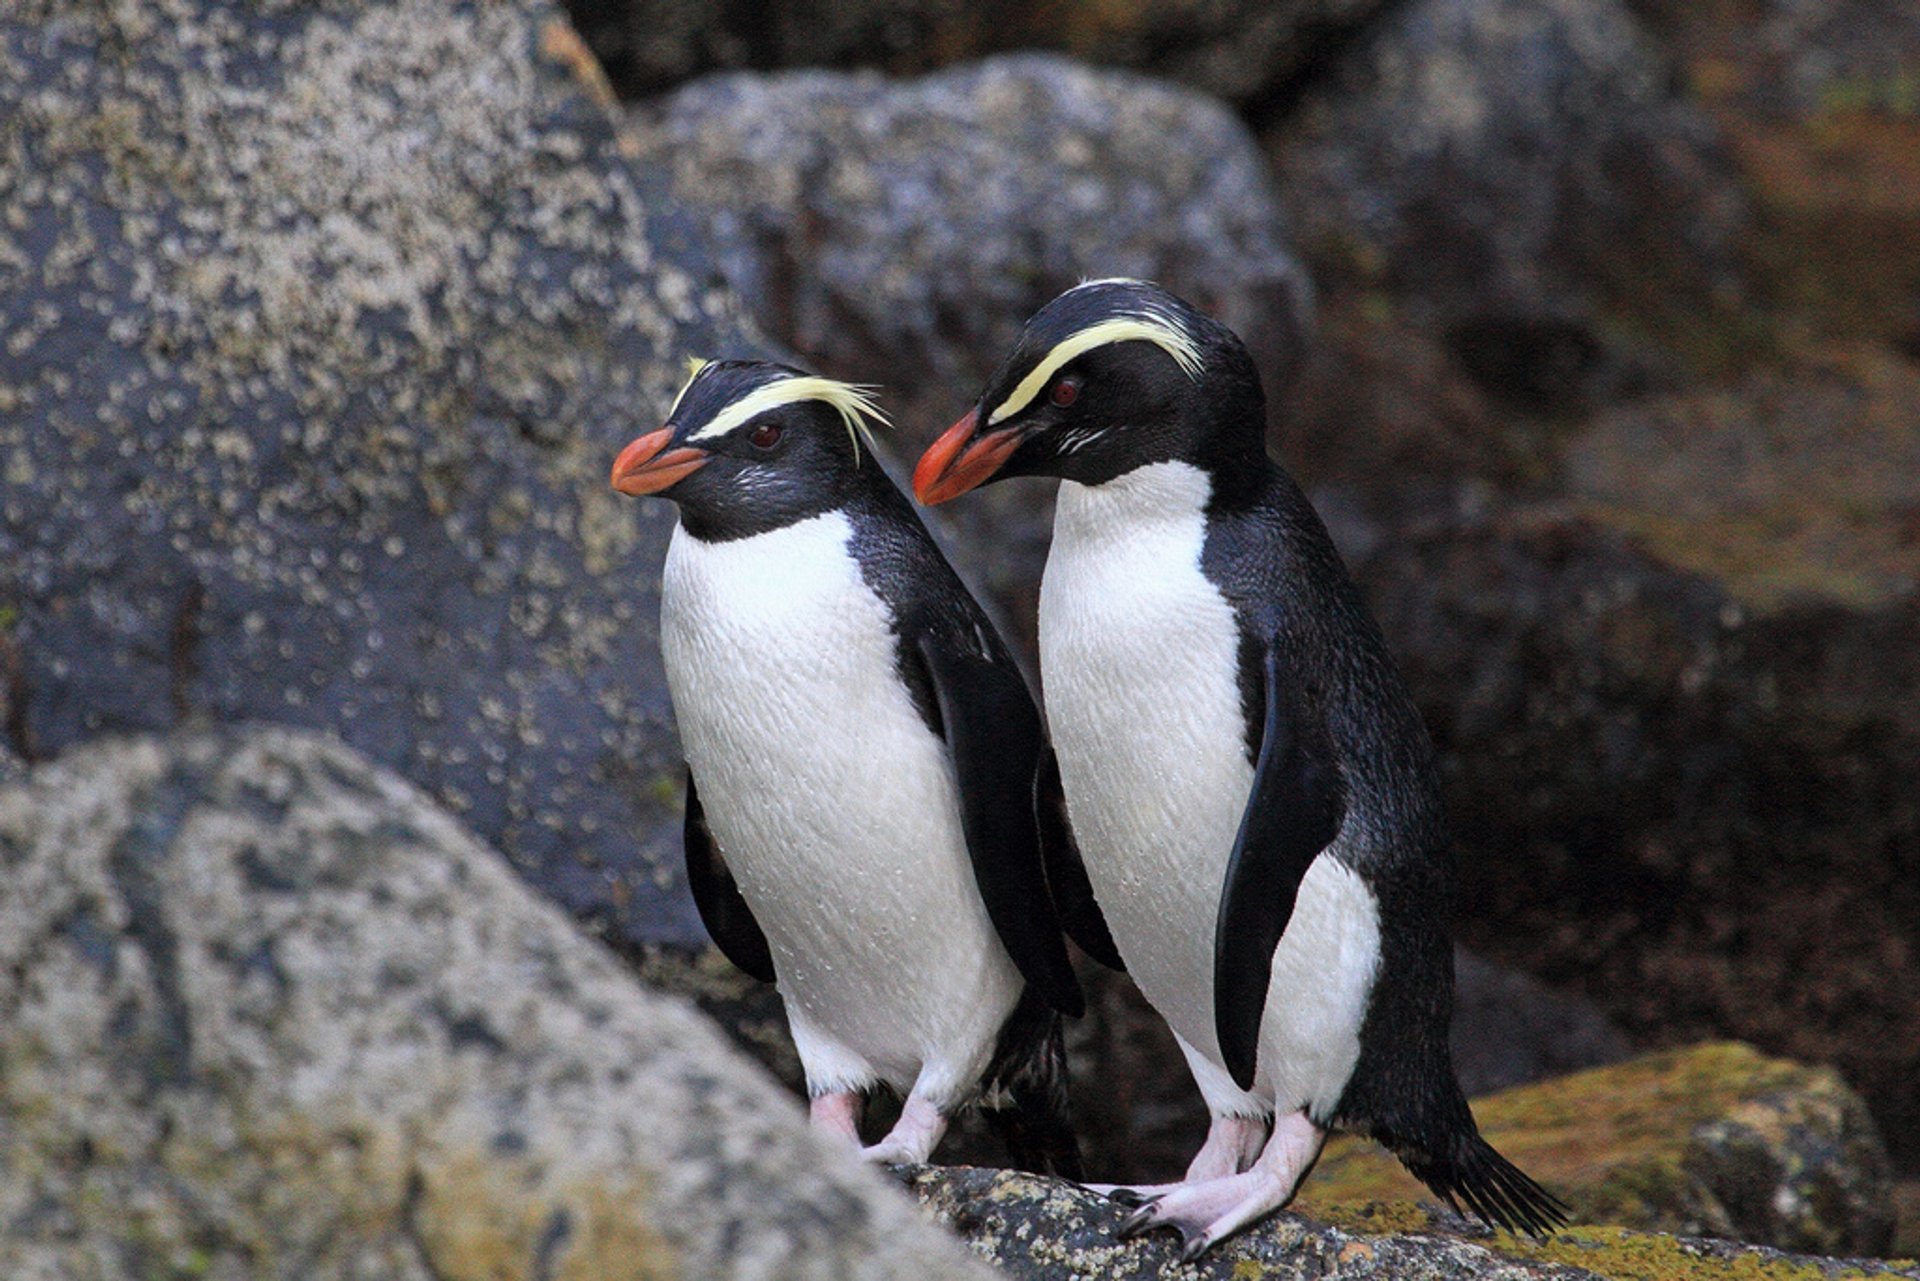 Tawaki—the Rainforest Penguin